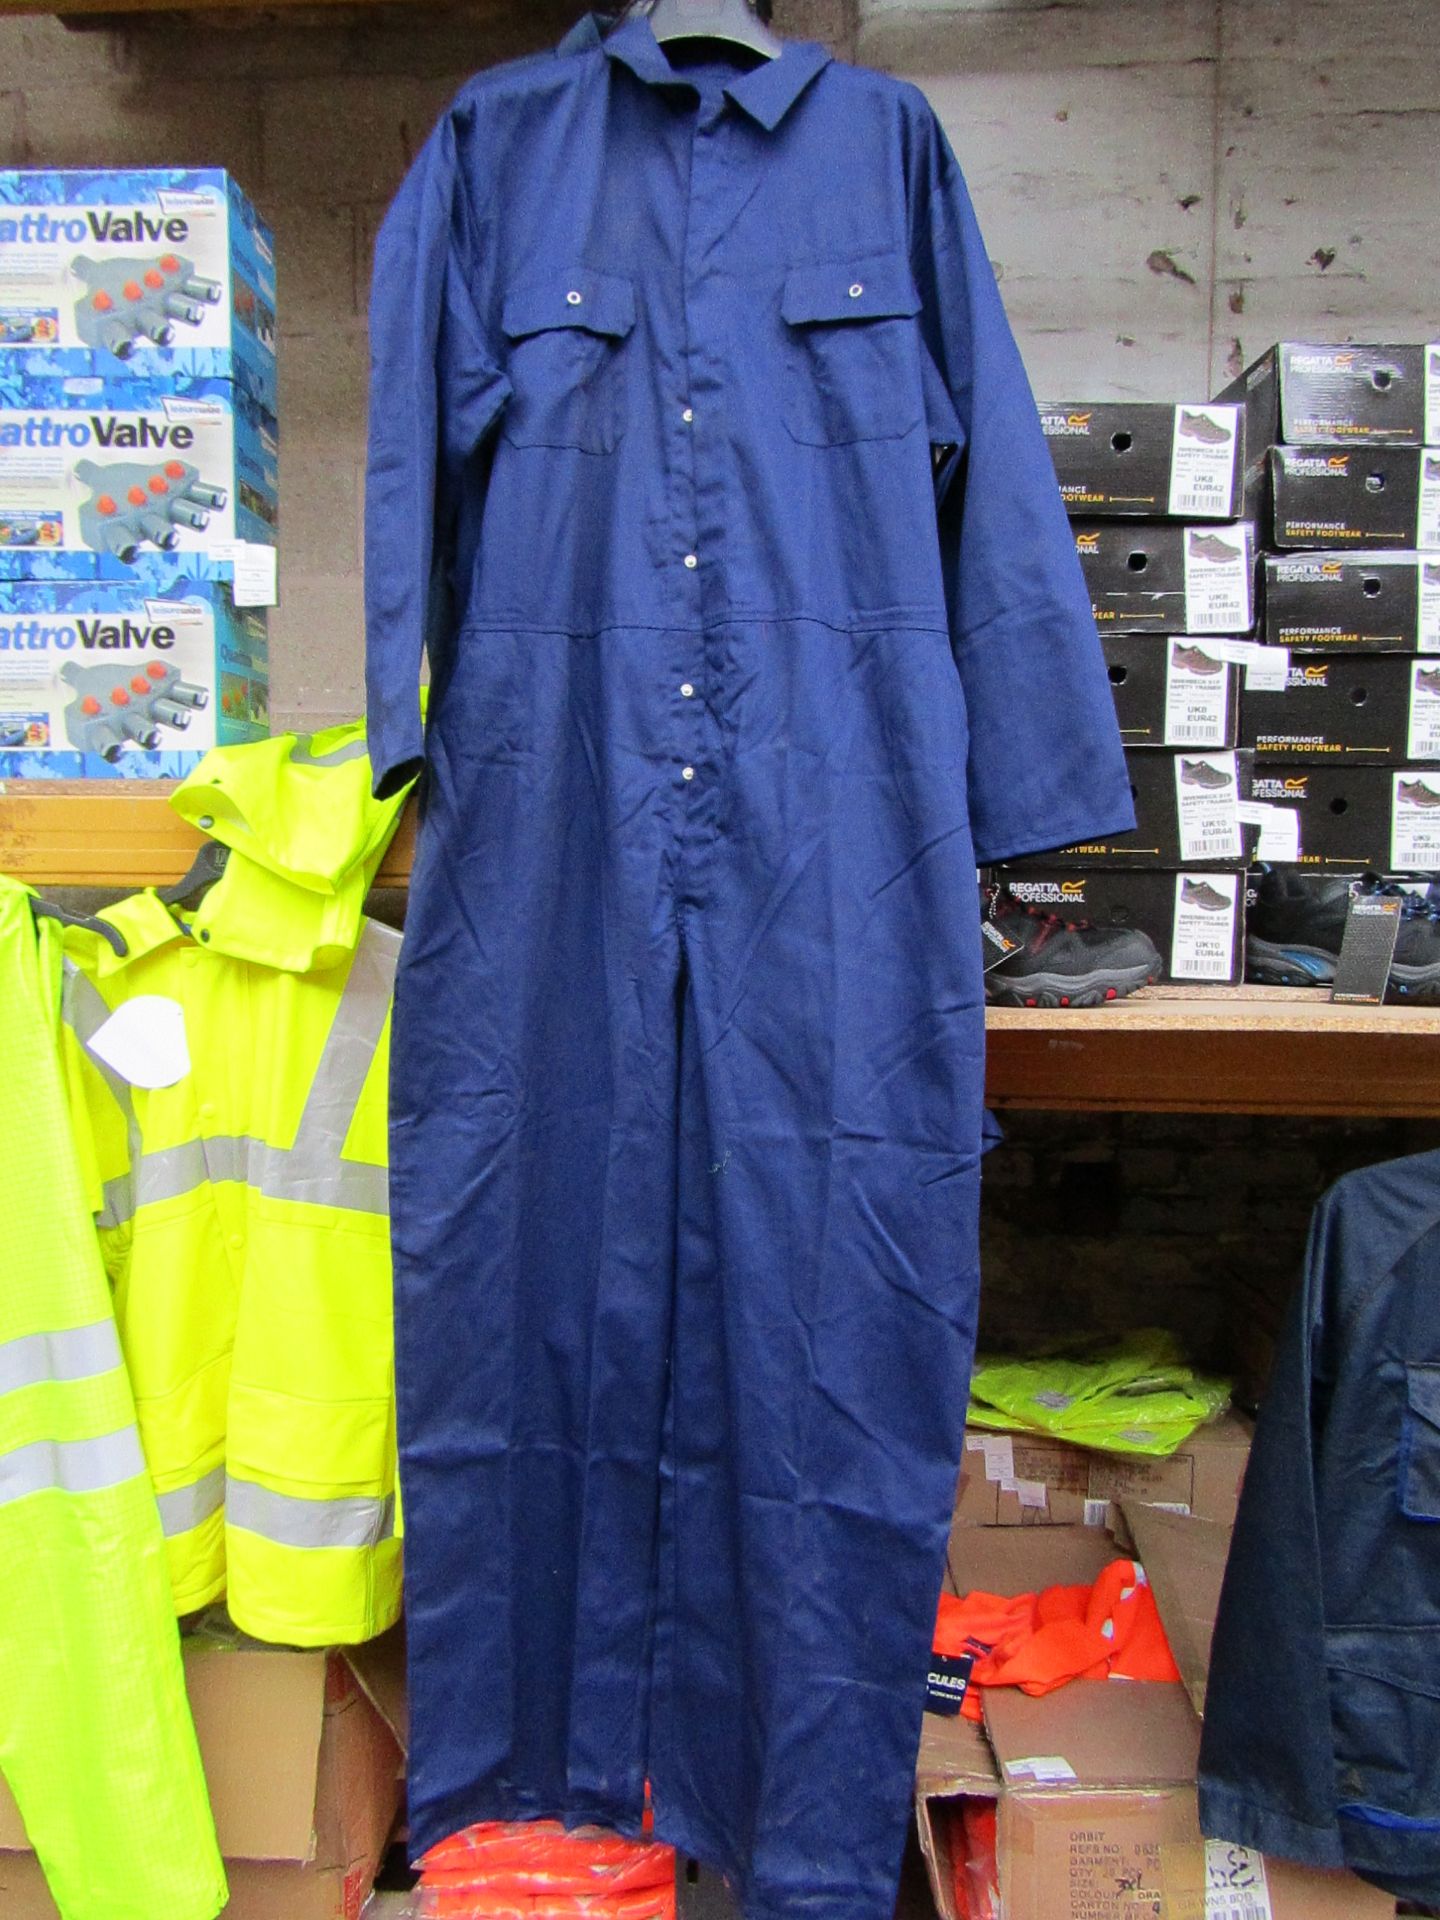 2 x Men's ST Workwear Boiler suit. Size XL. New in Packaging